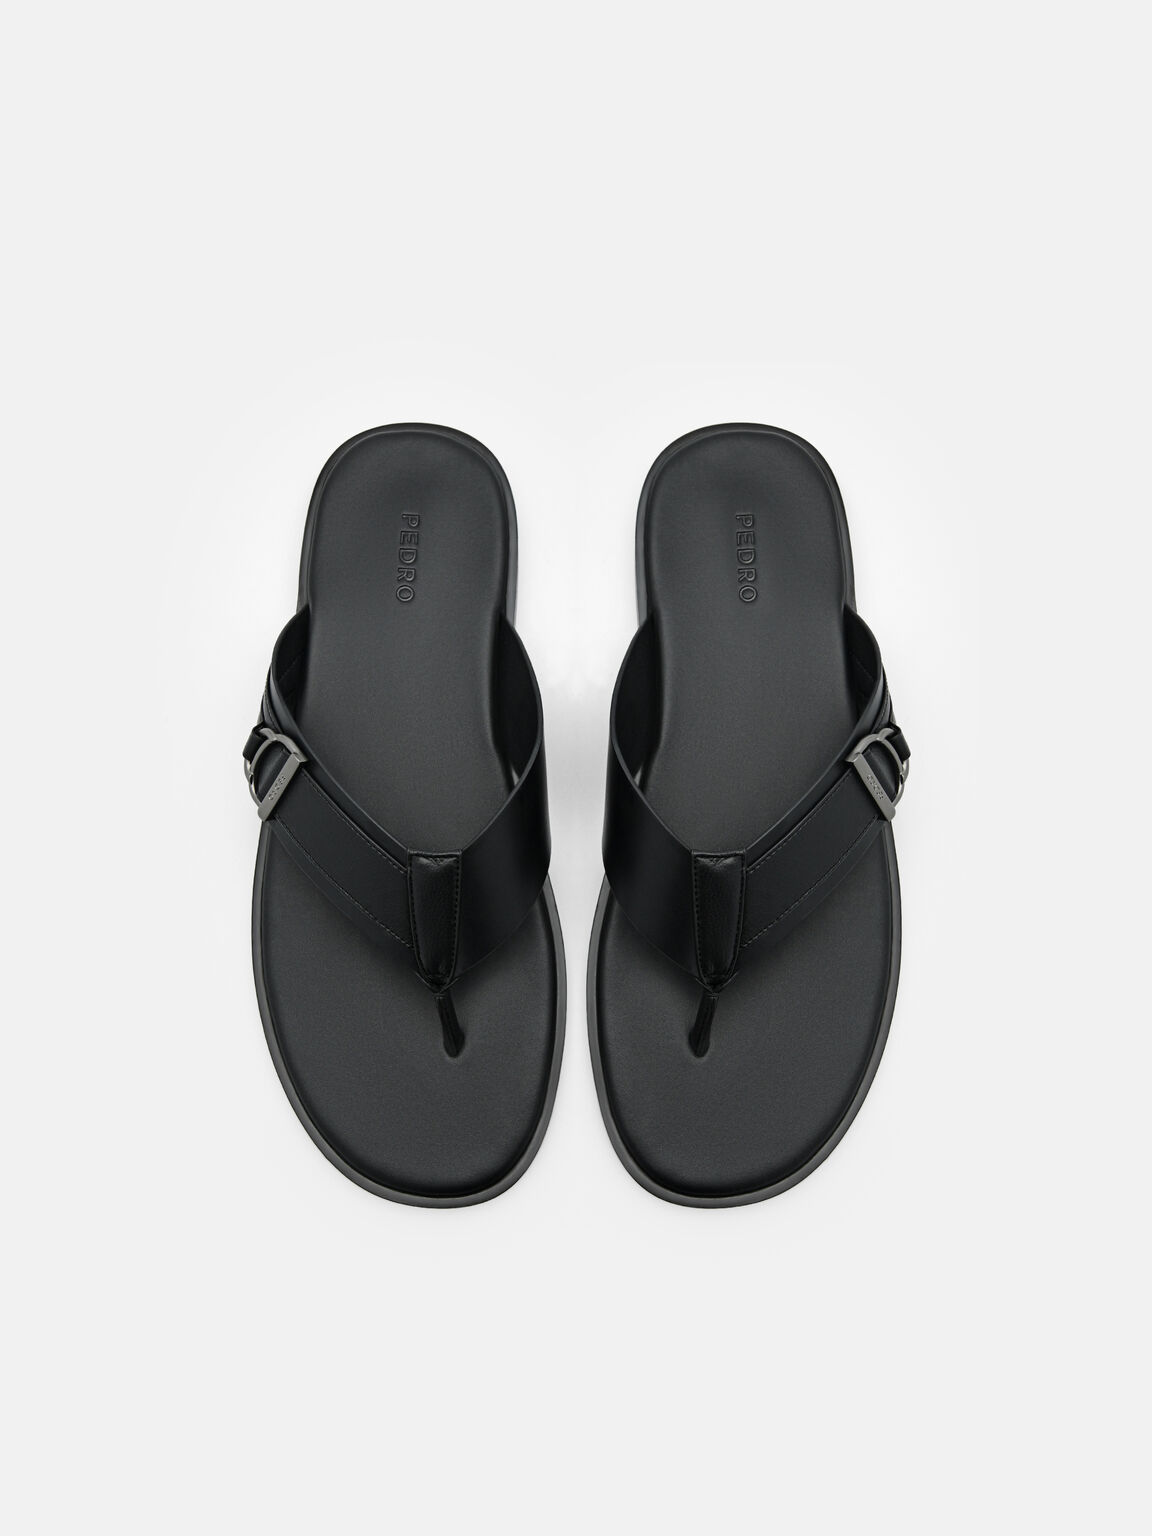 Jackson Thong Sandals, Black